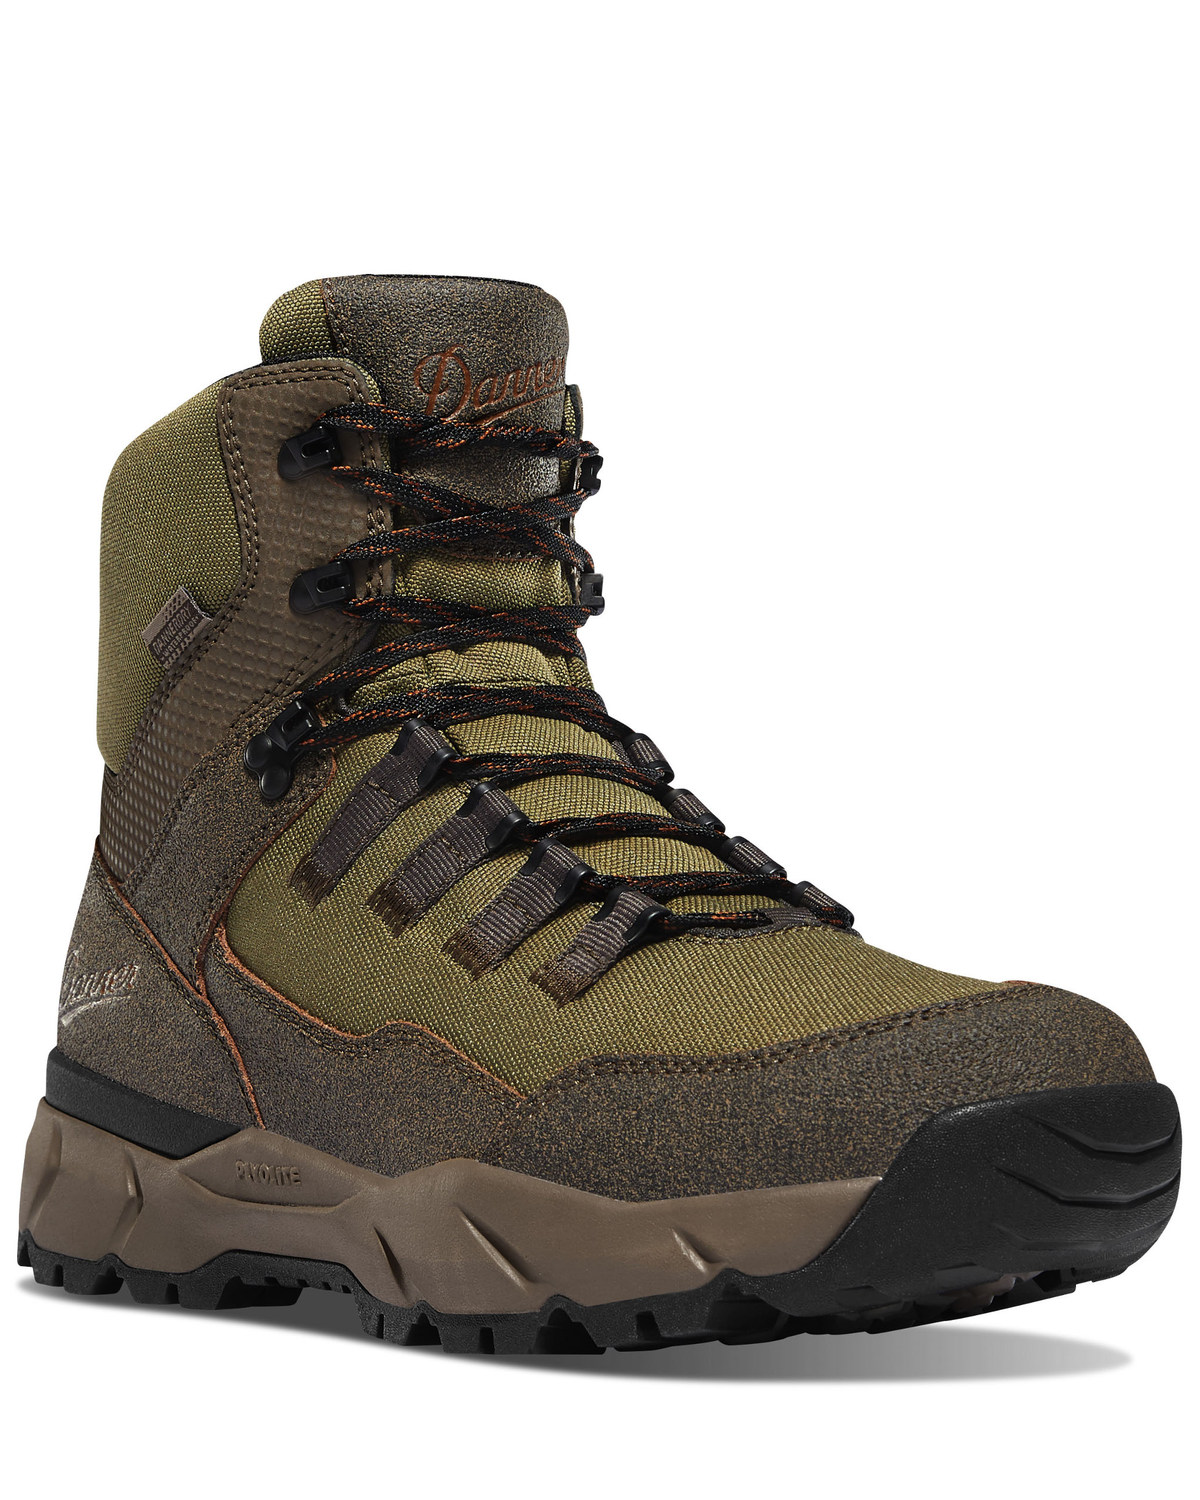 Danner Men's Vital Trail Hiking Boots - Soft Toe